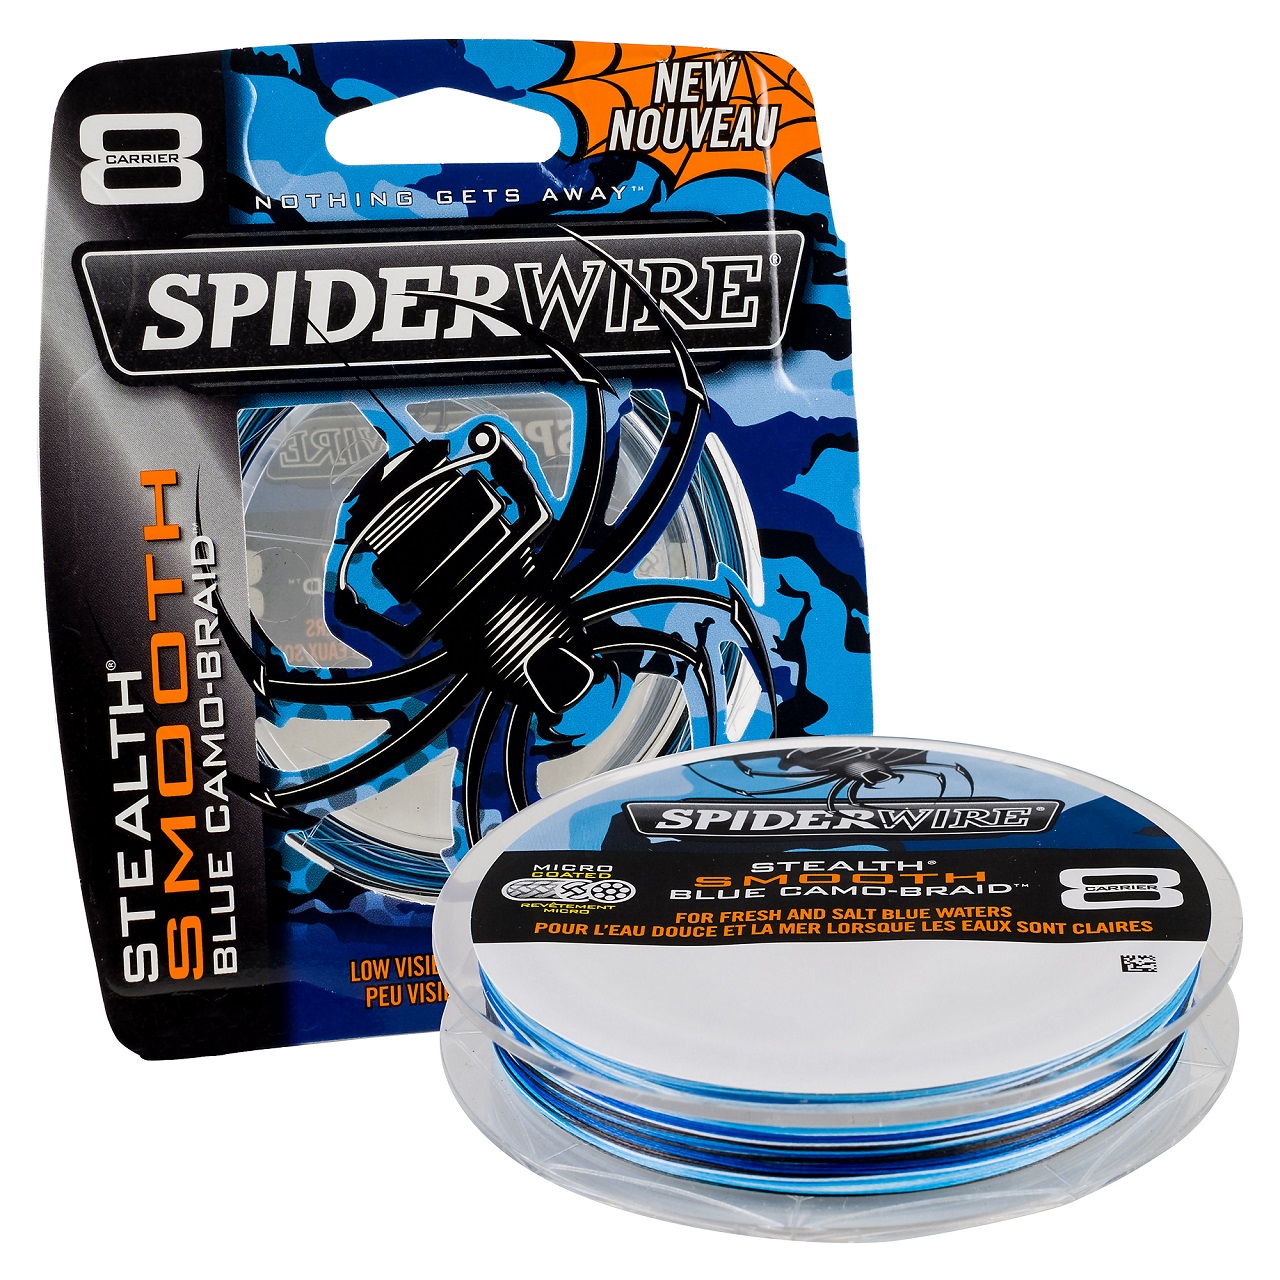 SpiderWire Stealth Smooth Blue Camo 8x 150mt 1476022.jpg